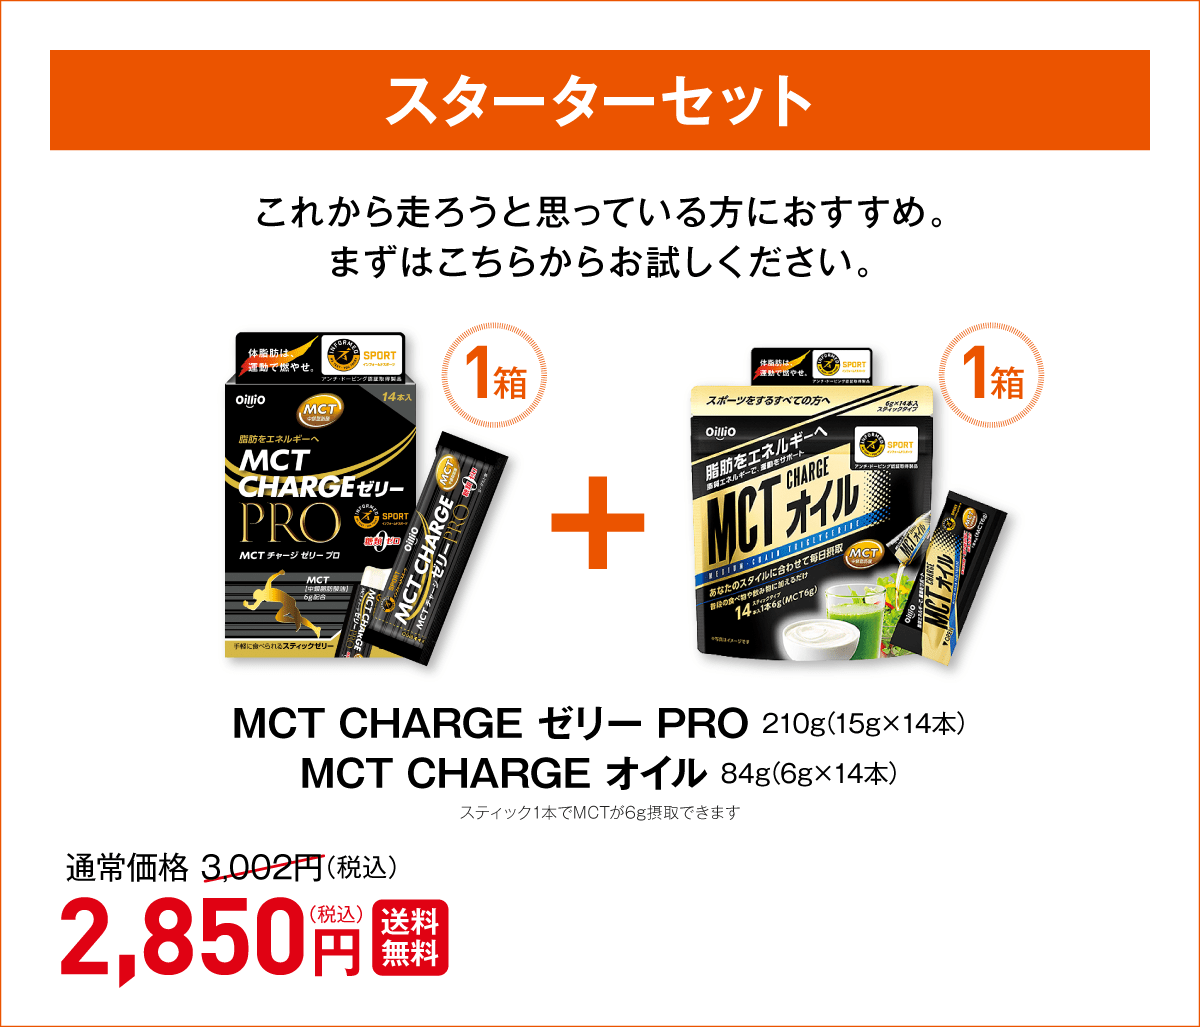 MCT CHARGE ゼリー PRO 210g(15g×14本) MCT CHARGE オイル 84g(6g×14本)